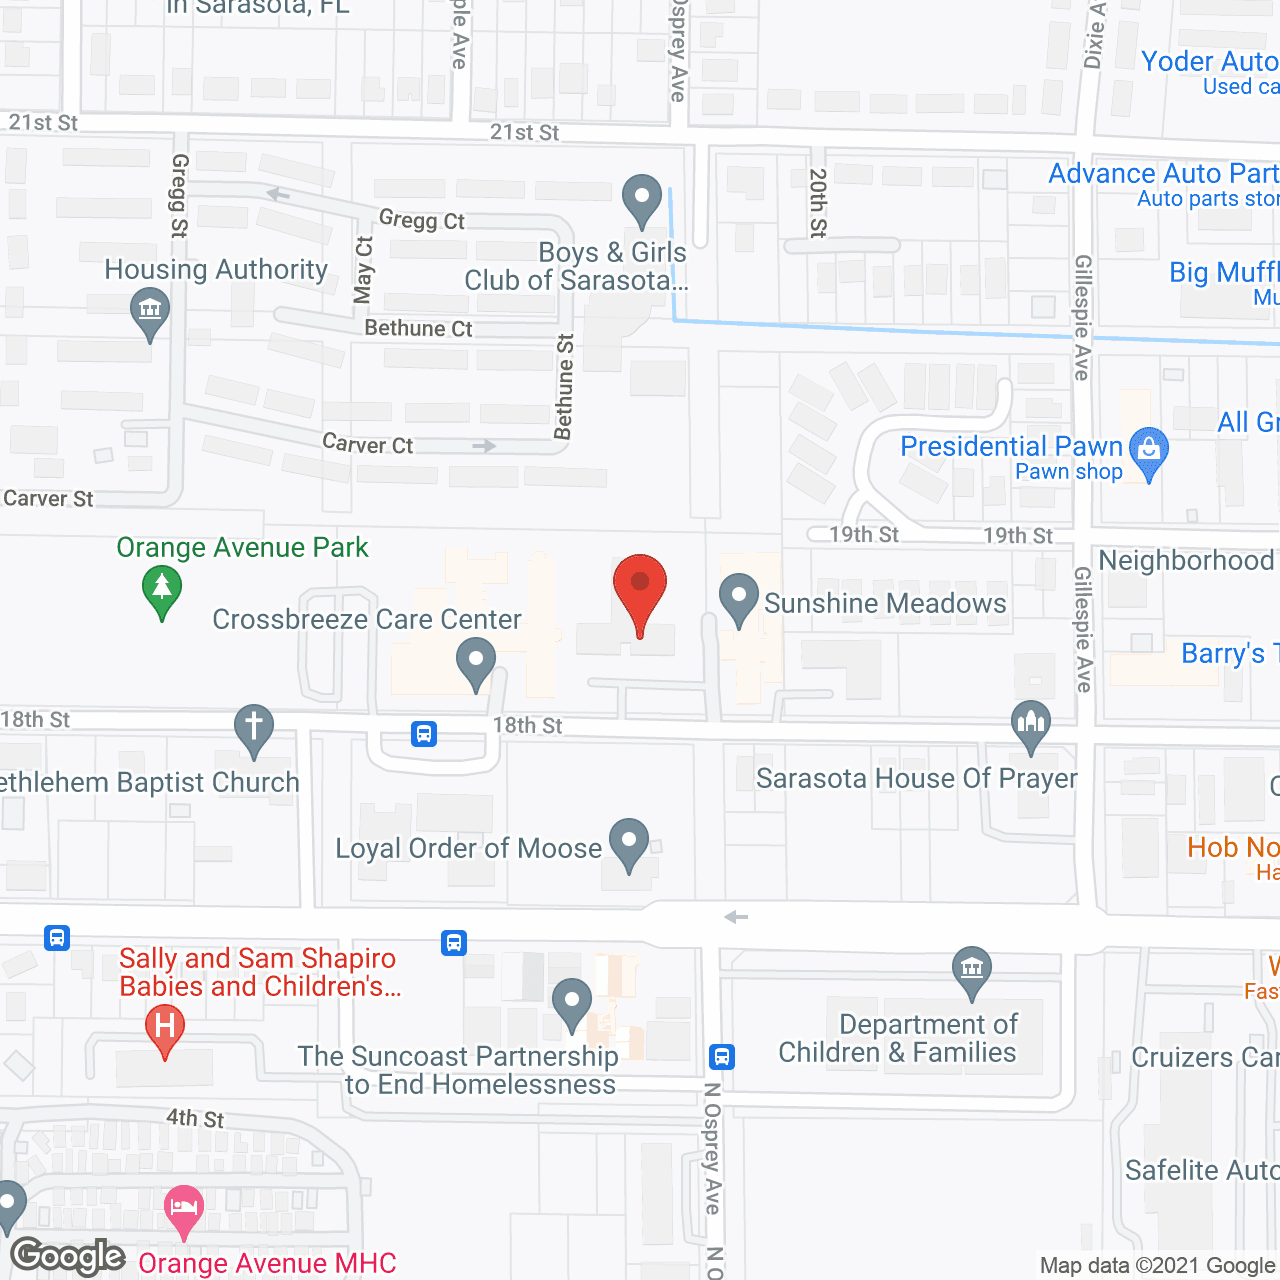 J H Floyd Sunshine Village in google map